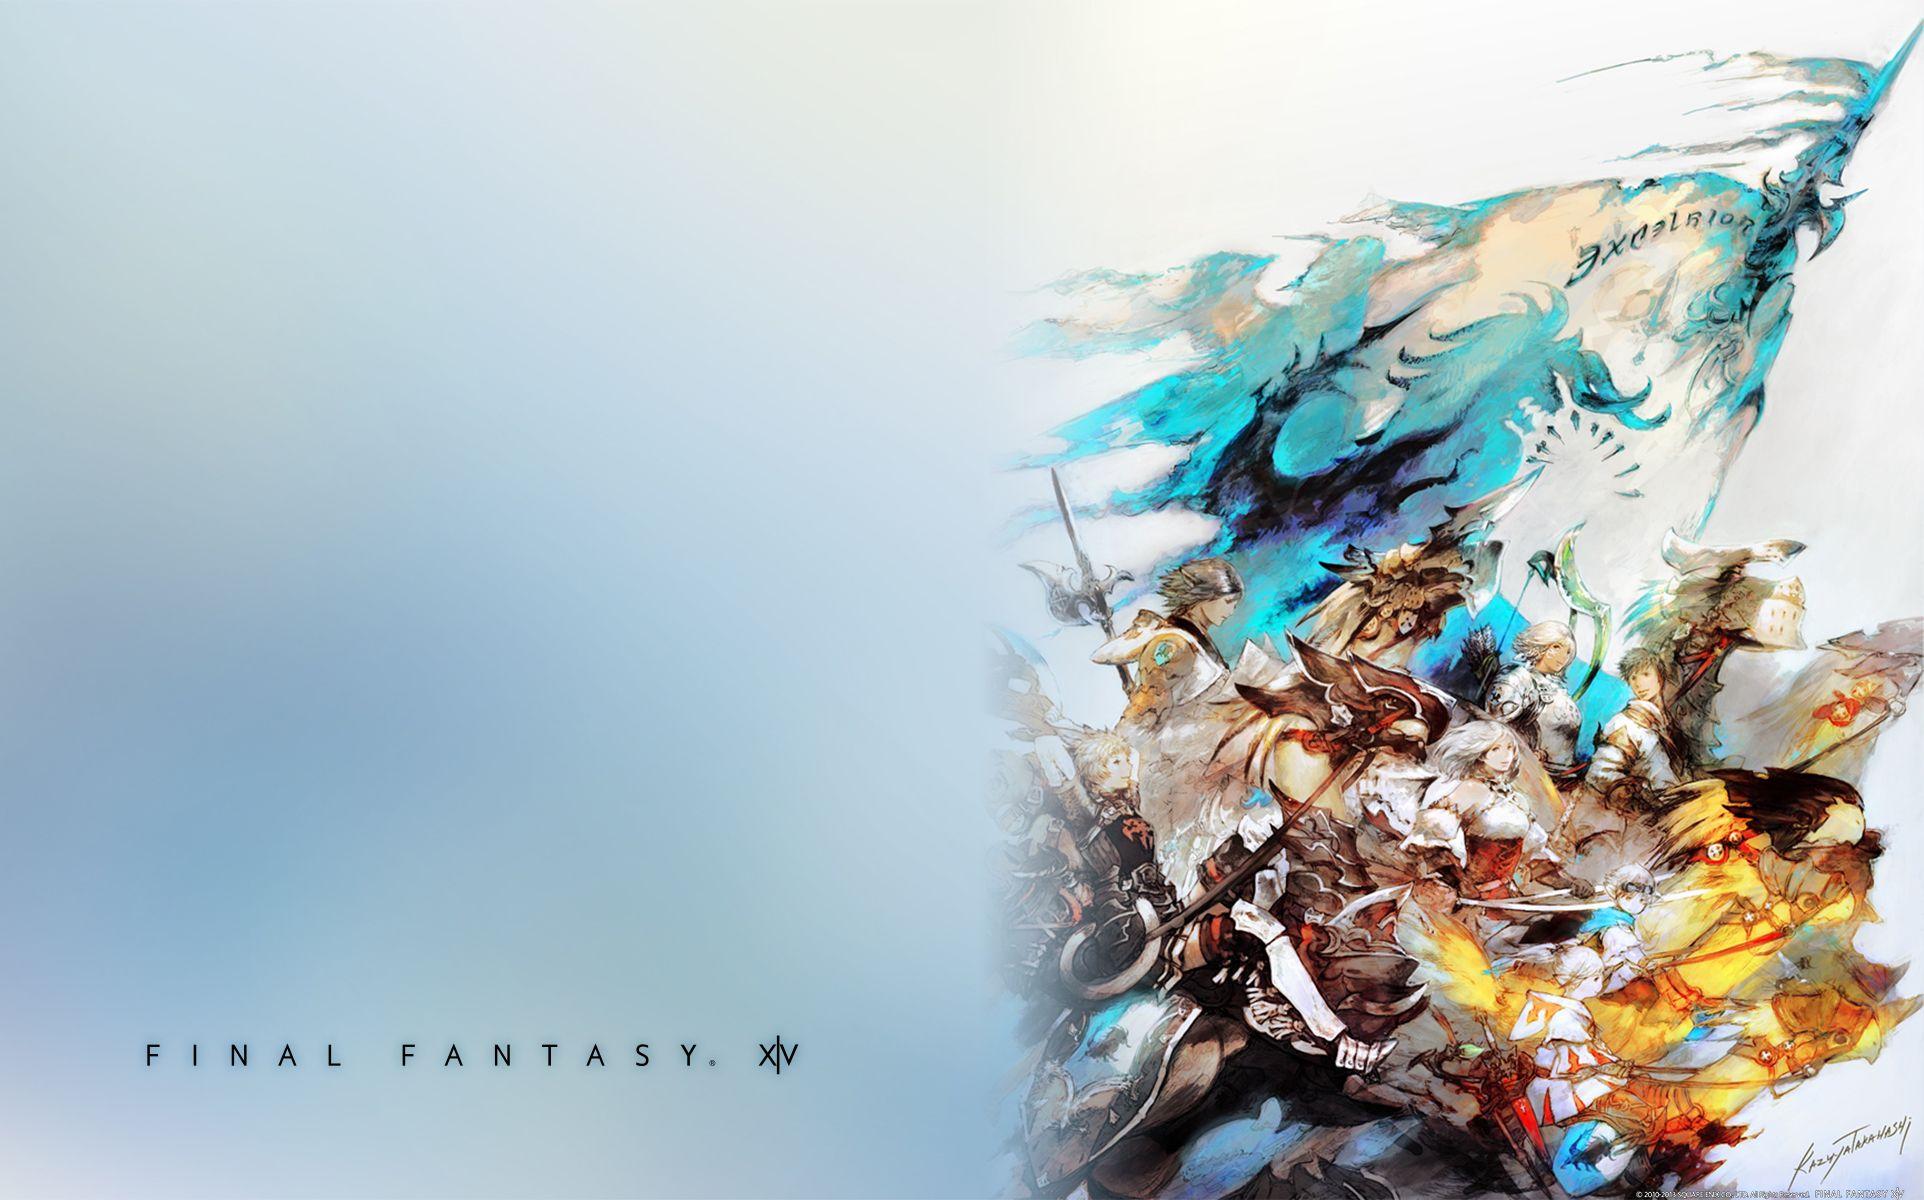 Amazing Final Fantasy 14 Wallpaper in High Quality, Tama Eden